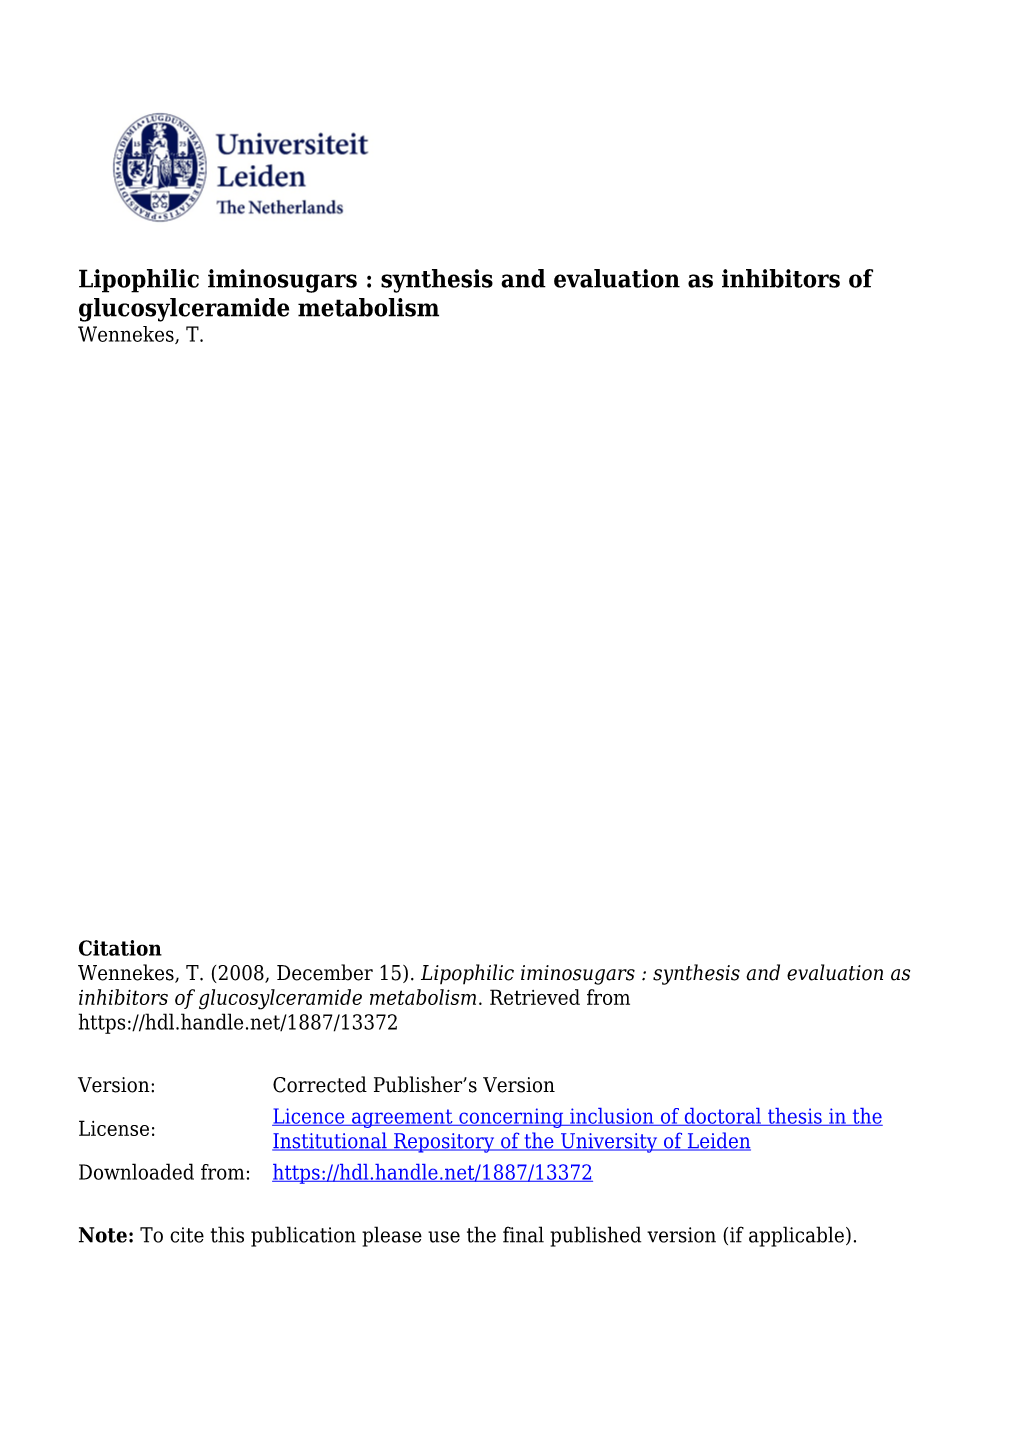 3 Improving Glycemic Control with Lipophilic Iminosugars Iminosugar